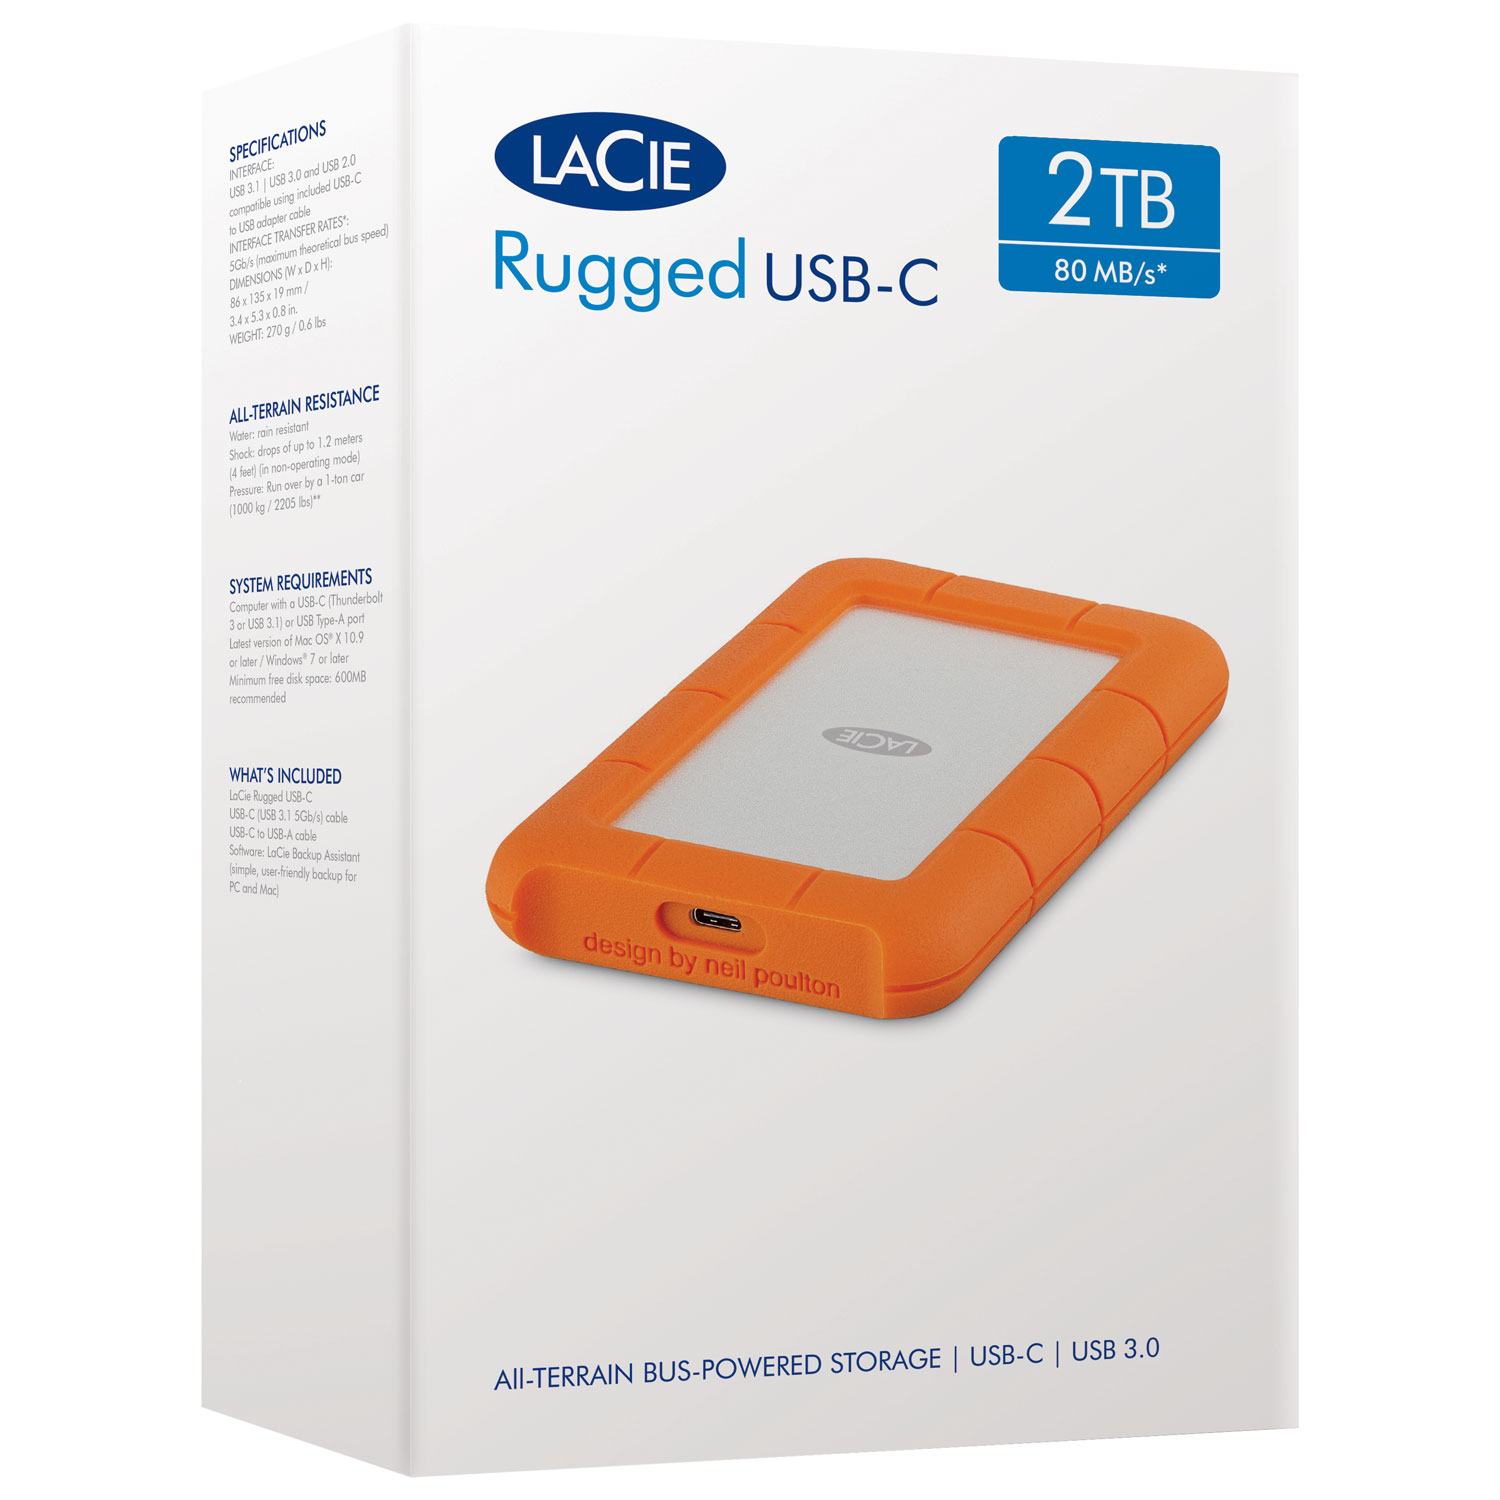 LaCie Rugged 2TB USB-C Portable External Hard Drive for PC/Mac